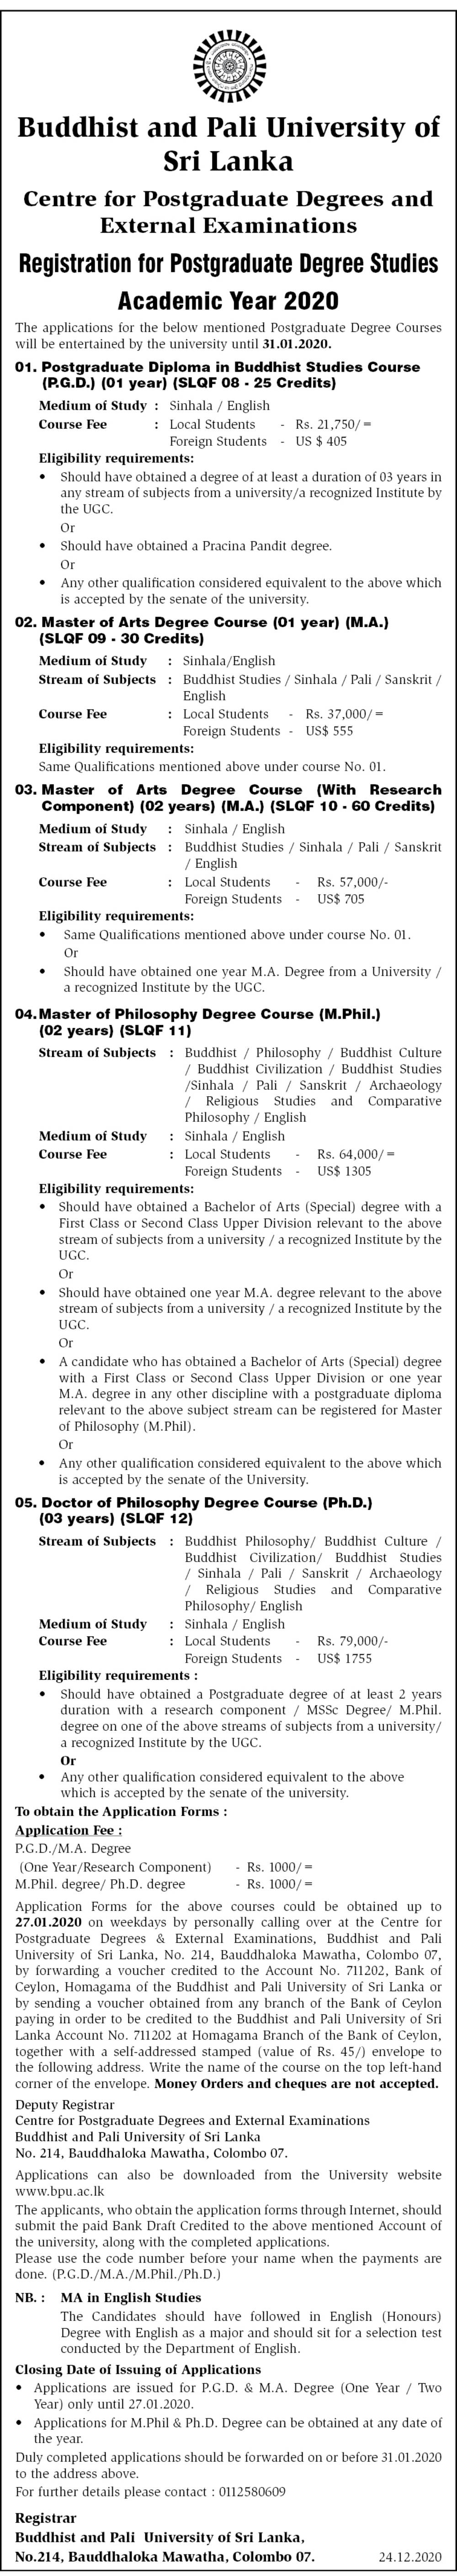 Registration for Postgraduate Degree Studies (2020) - Buddhist & Pali University of Sri Lanka